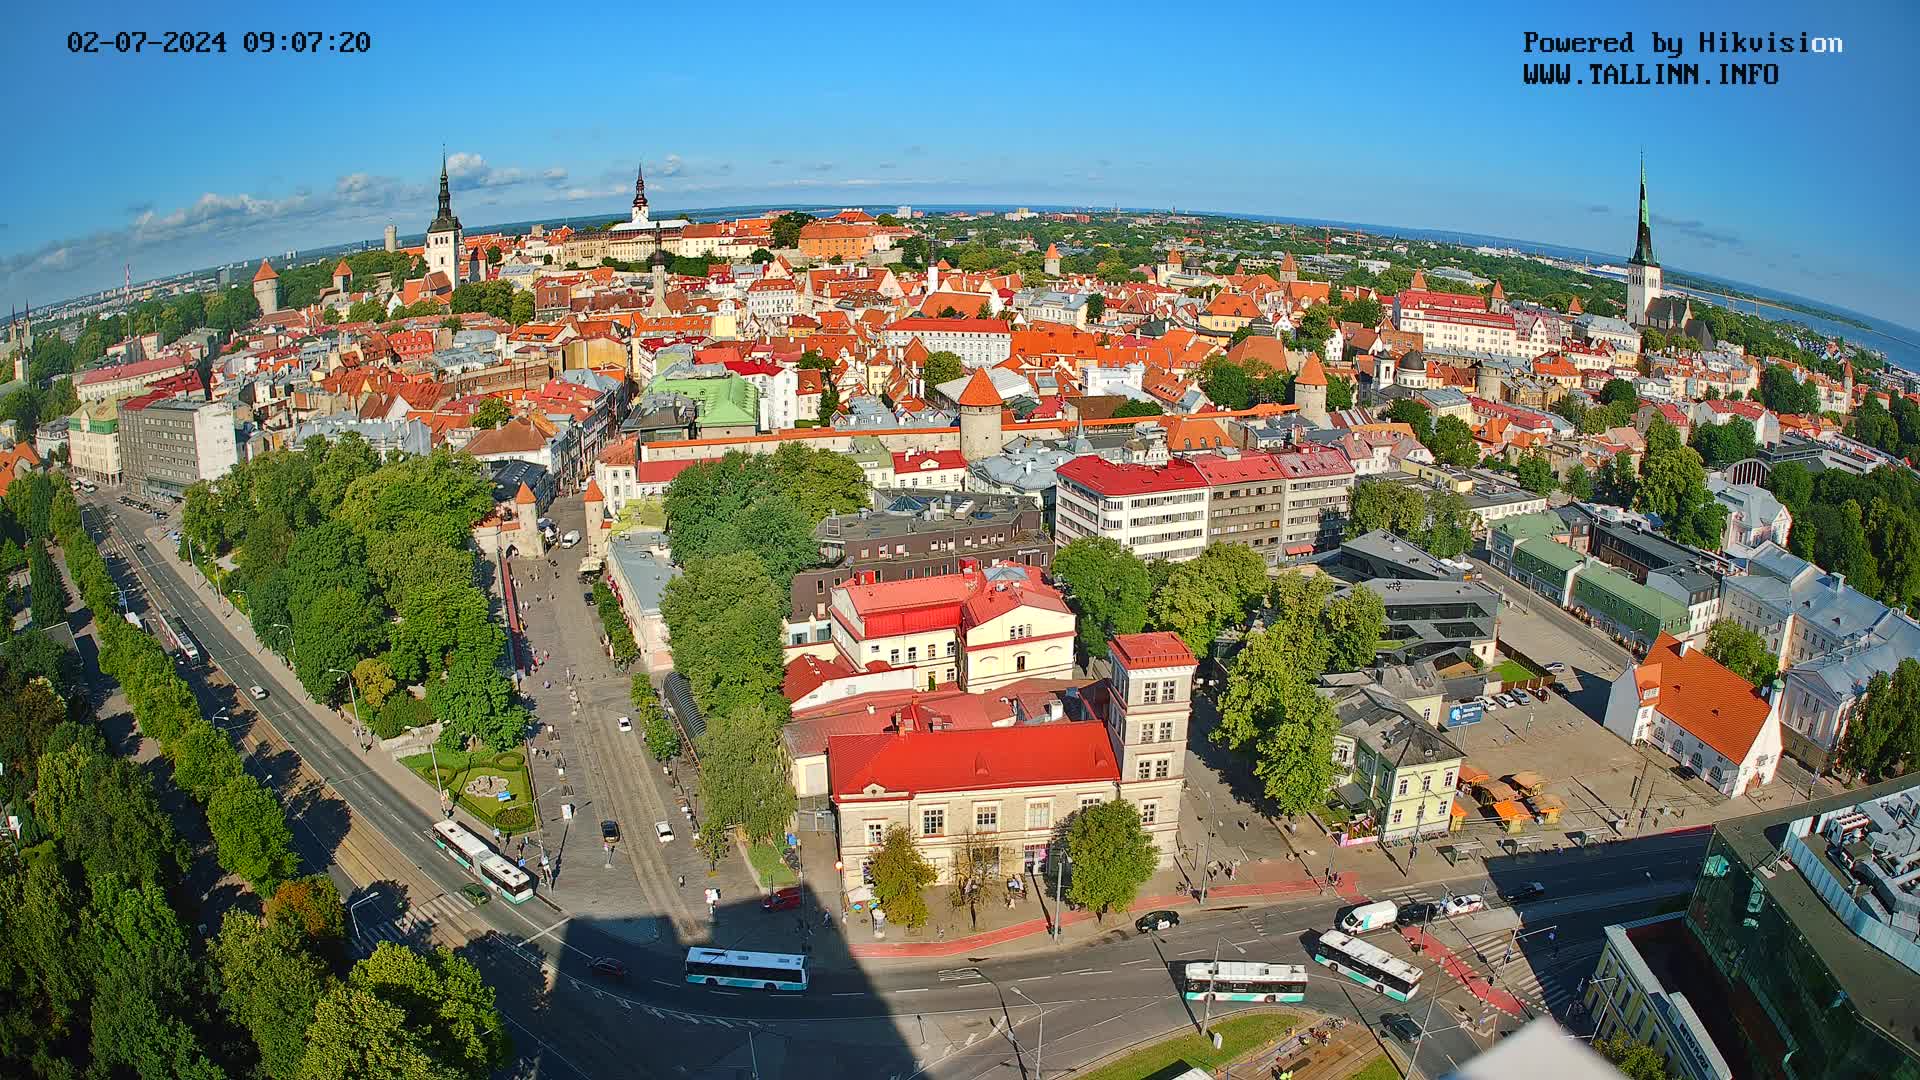 Tallinn Wed. 09:34